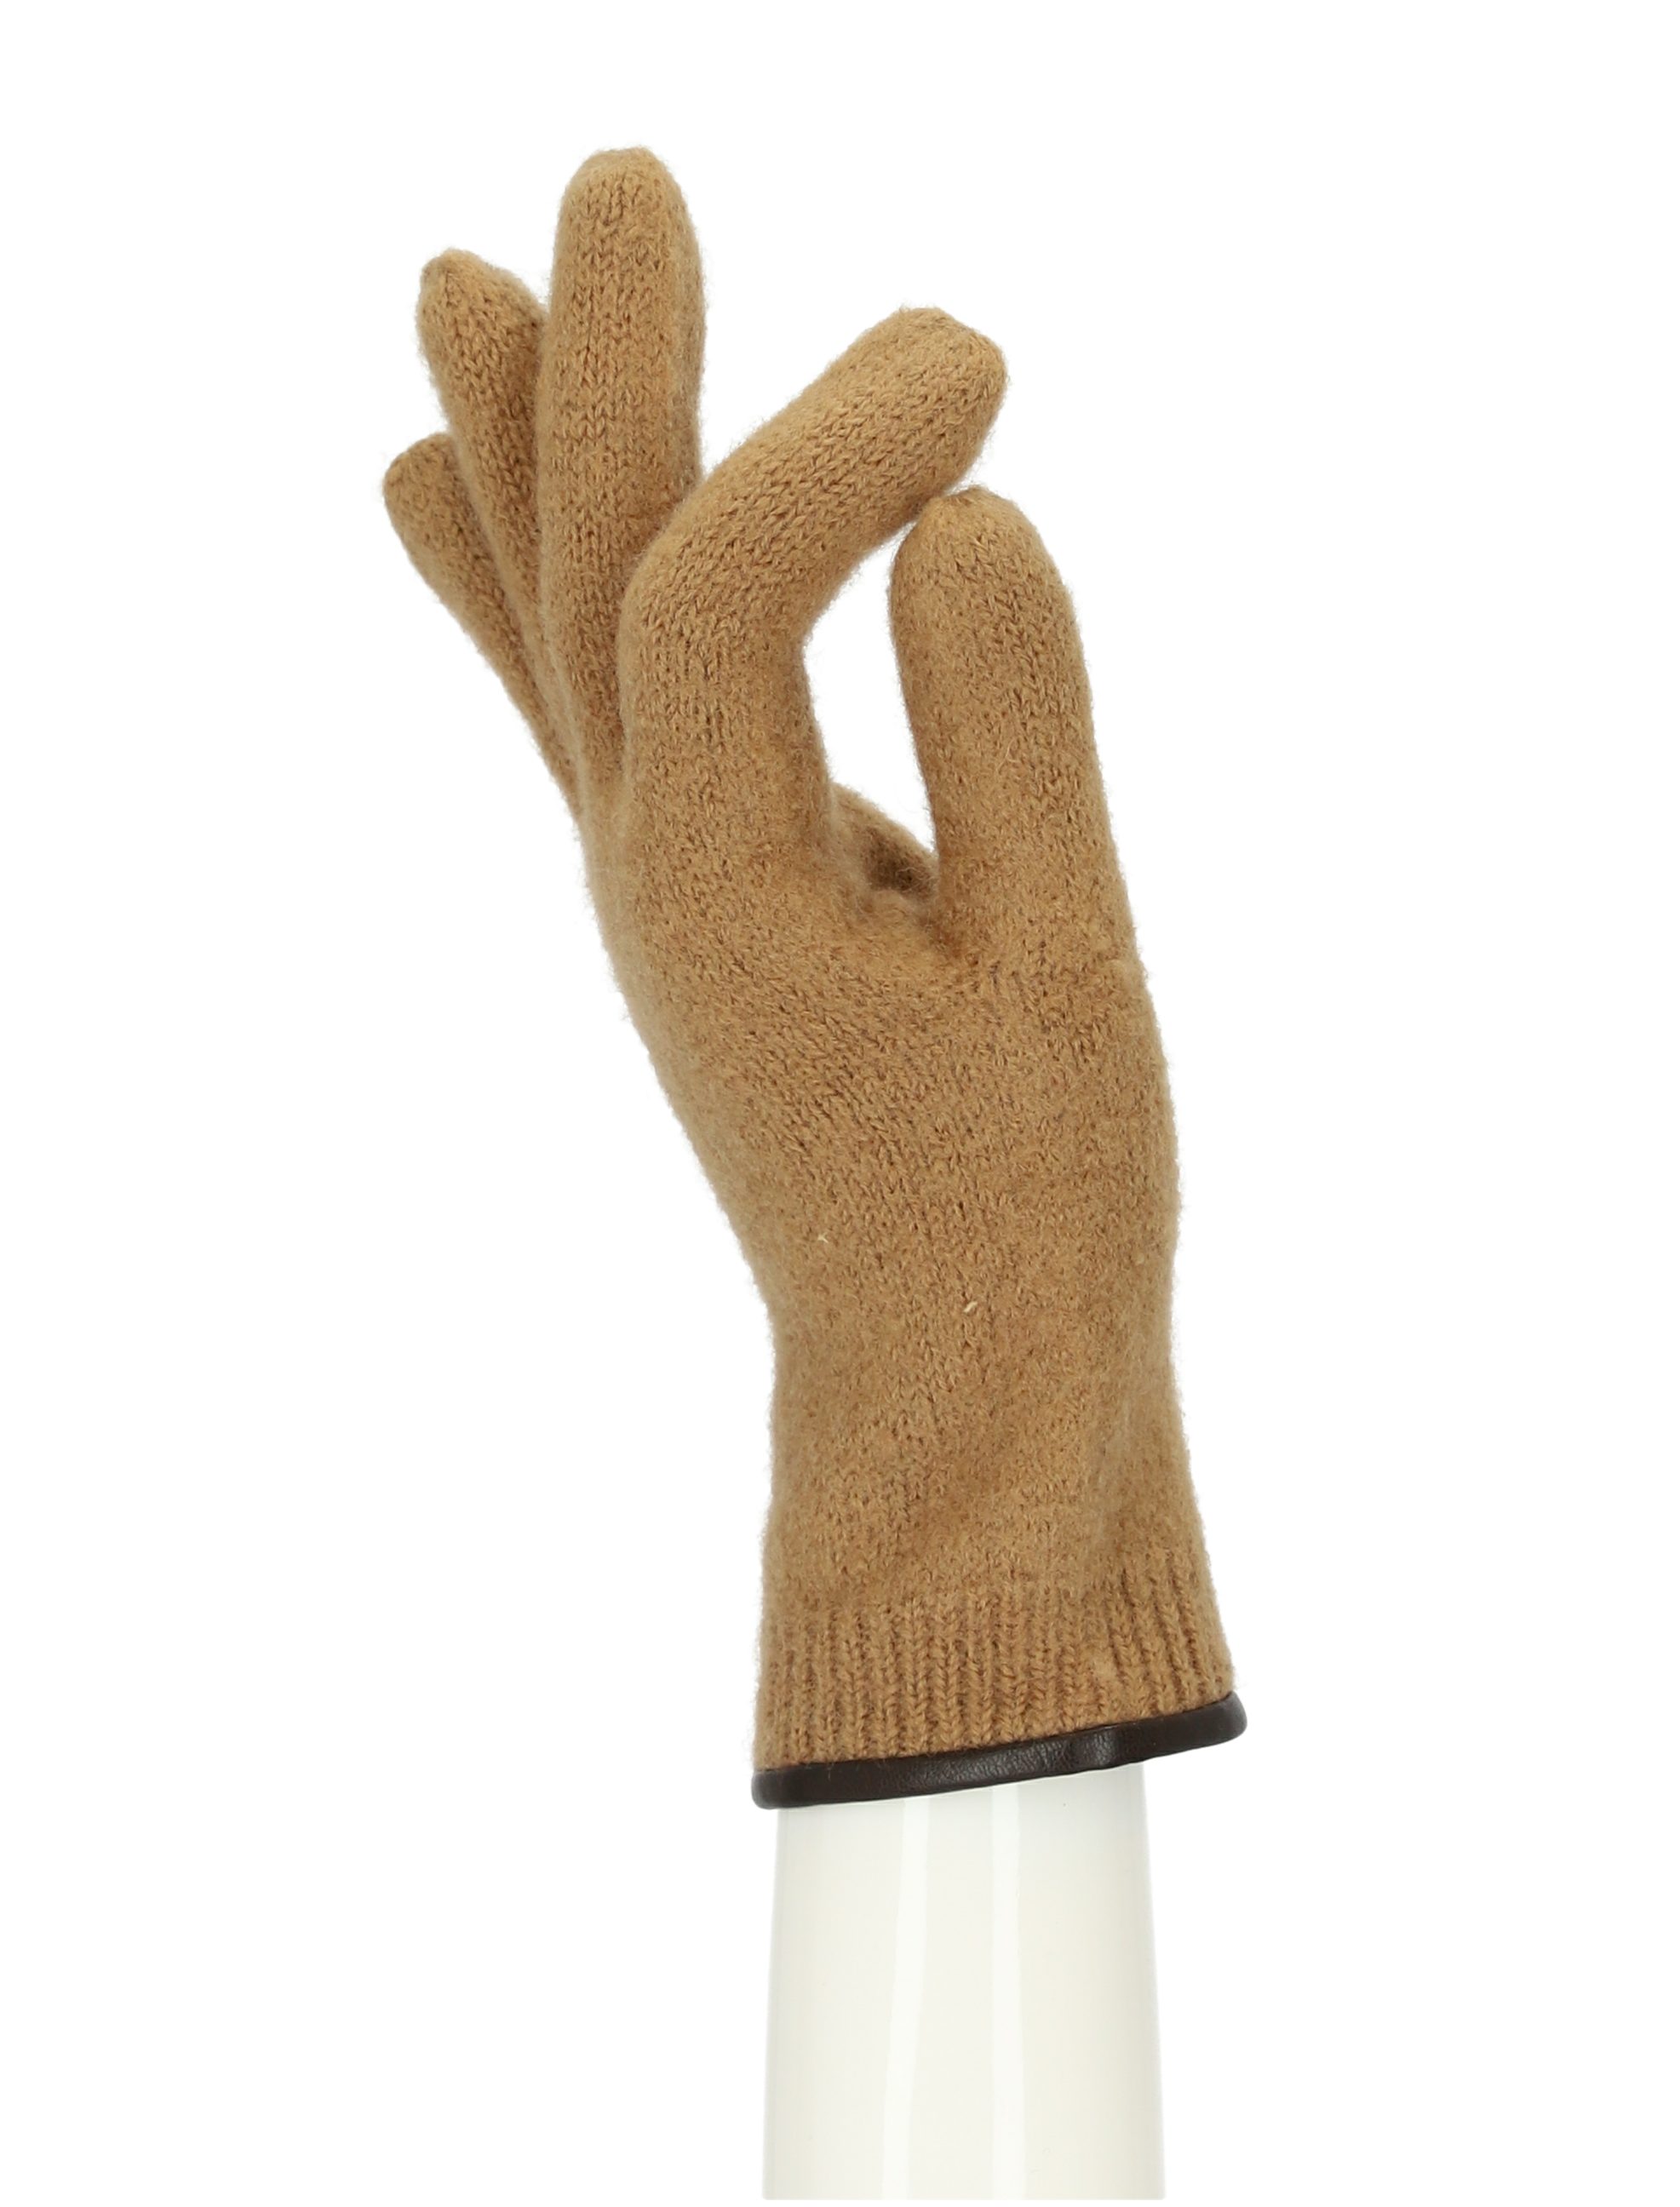 Strickhandschuhe Handschuh Wolle camel gewalkter Accessoires halsüberkopf Lederkante Strickhandschuh mit aus